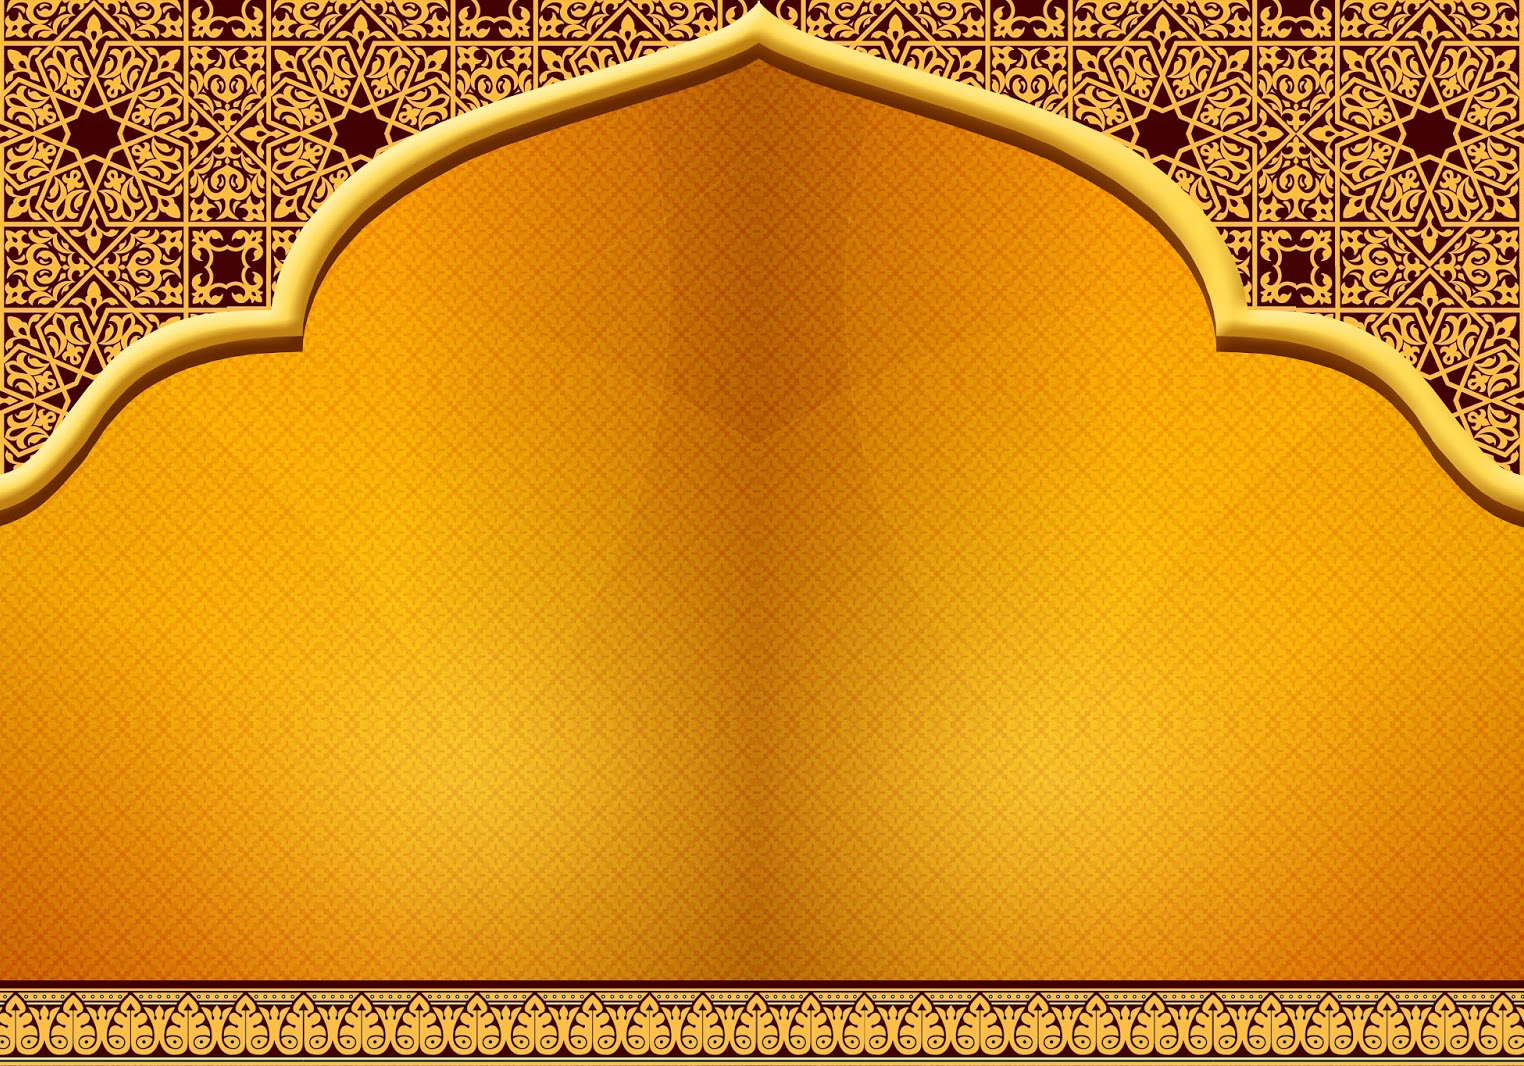 Gallery Islamic Background Design